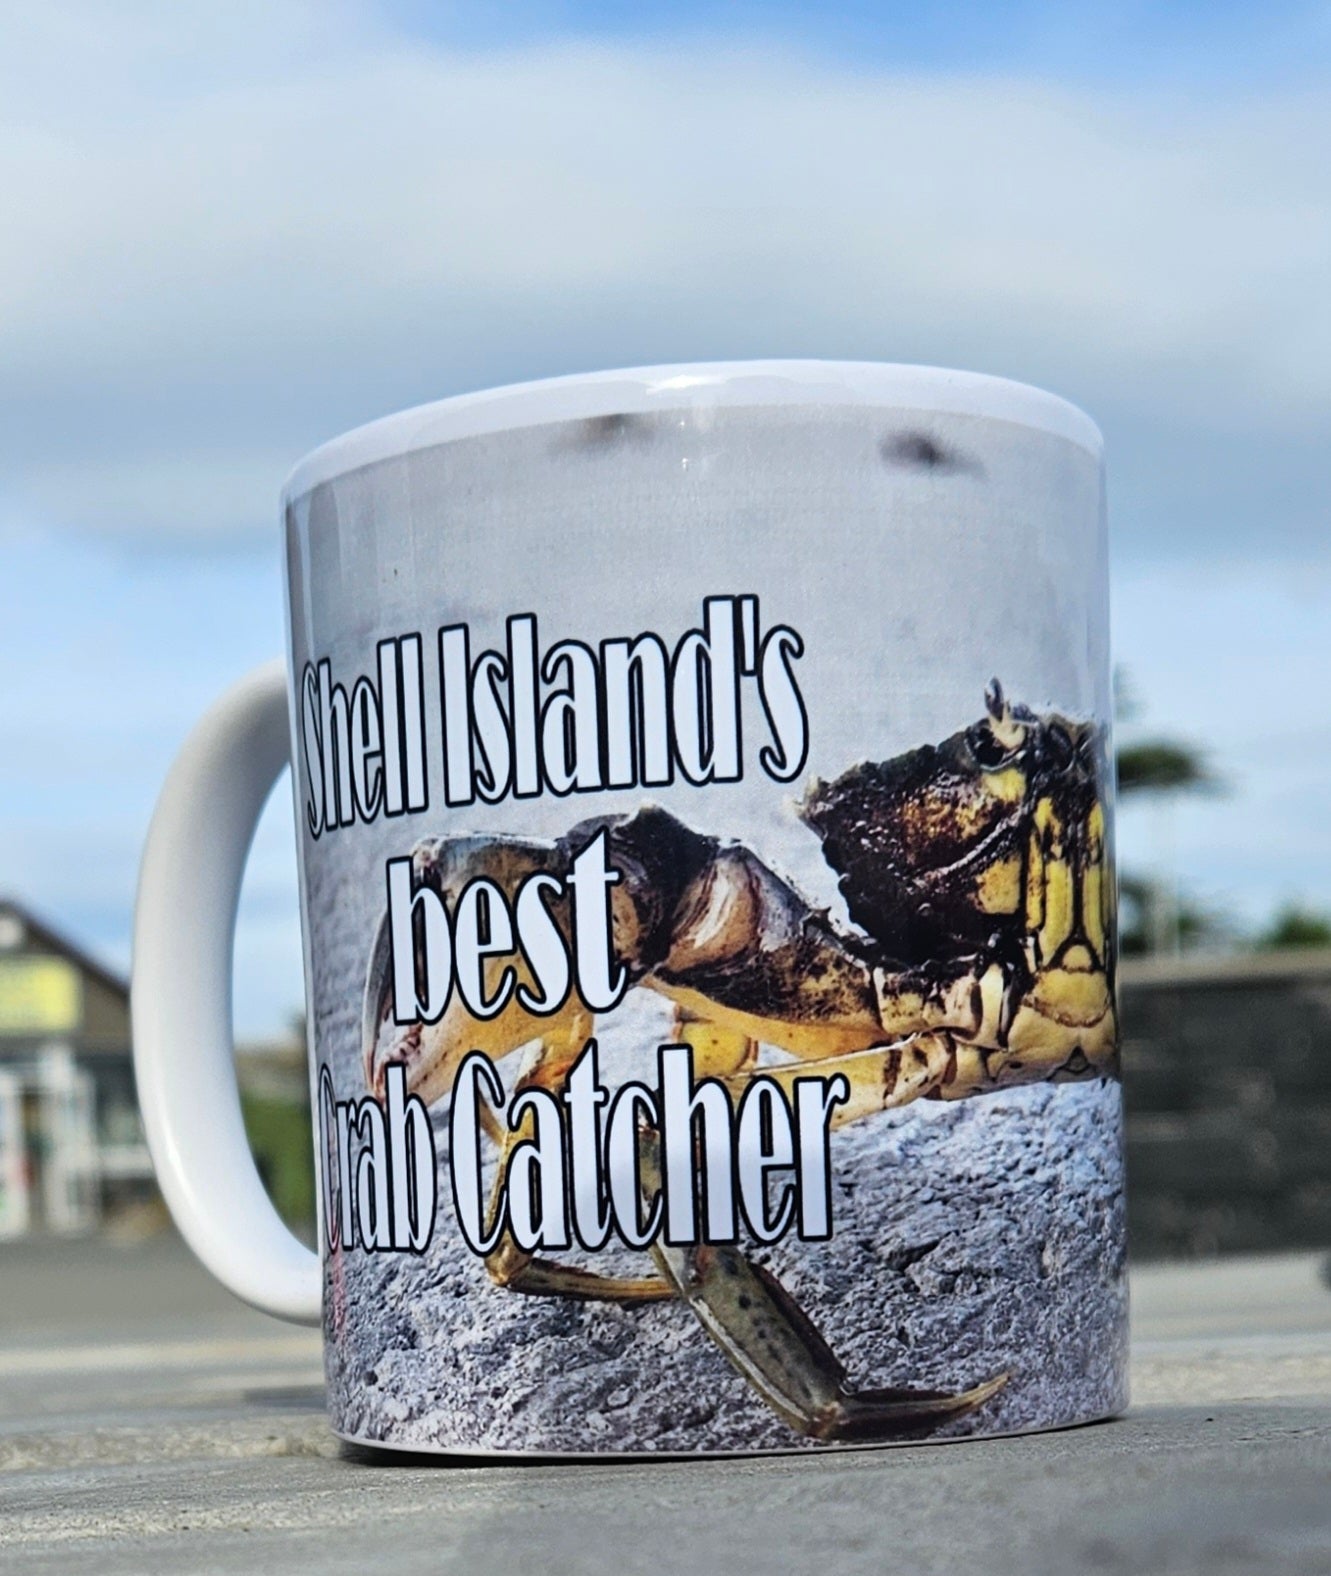 Shell Island's Best Crab Catcher Mug